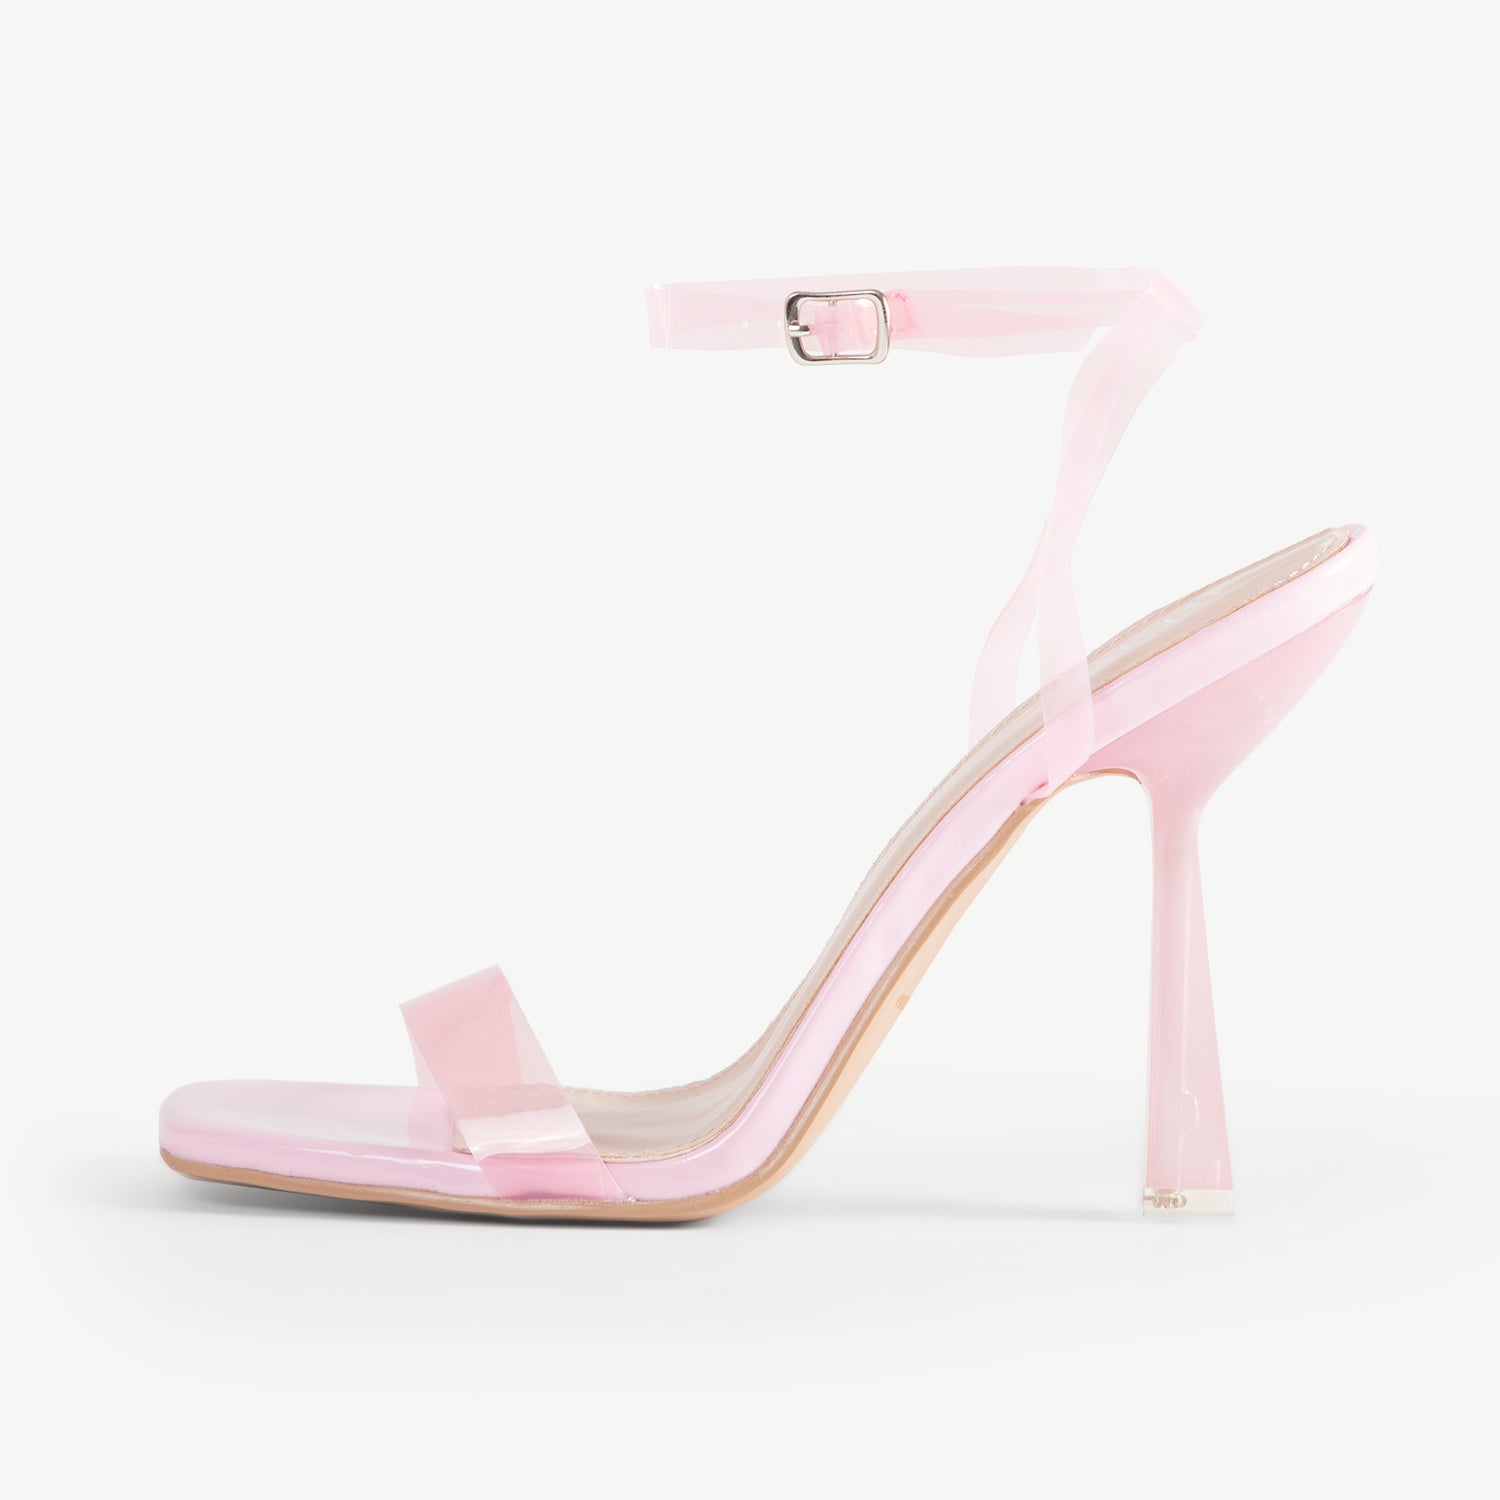 BEBO Arabella Perspex Sandal in Pink